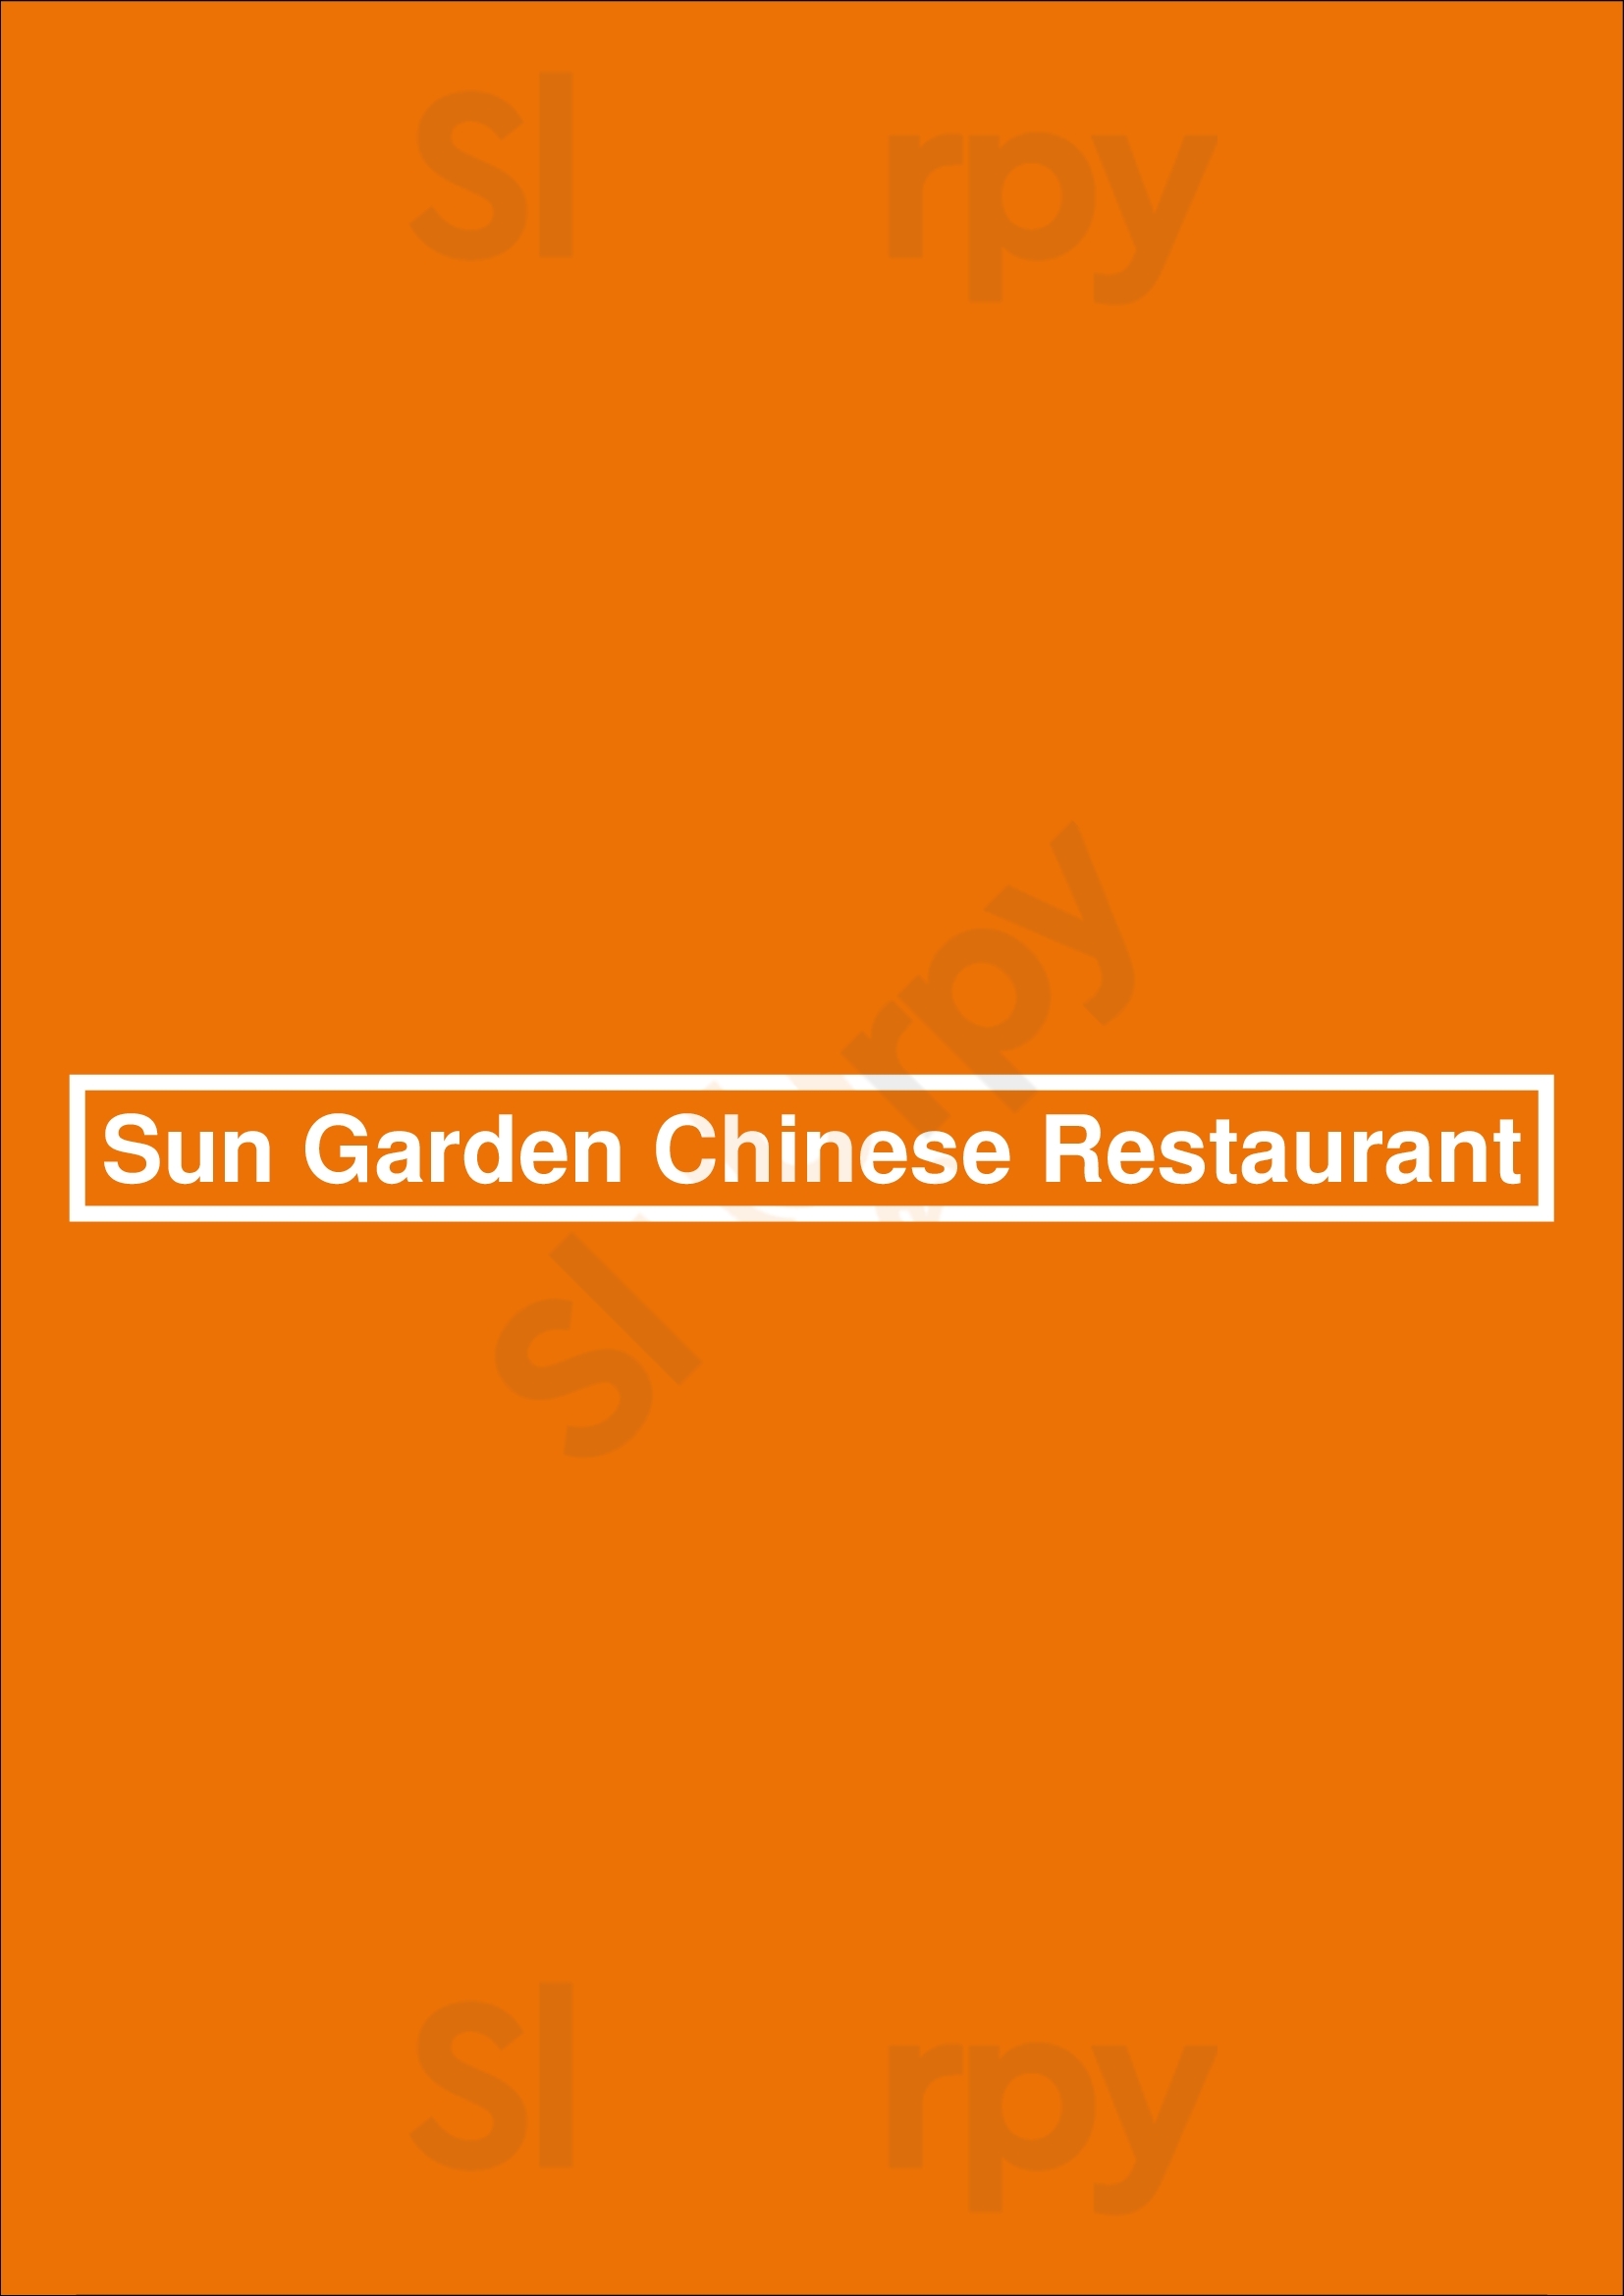 Sun Garden Chinese Restaurant Vancouver Menu - 1